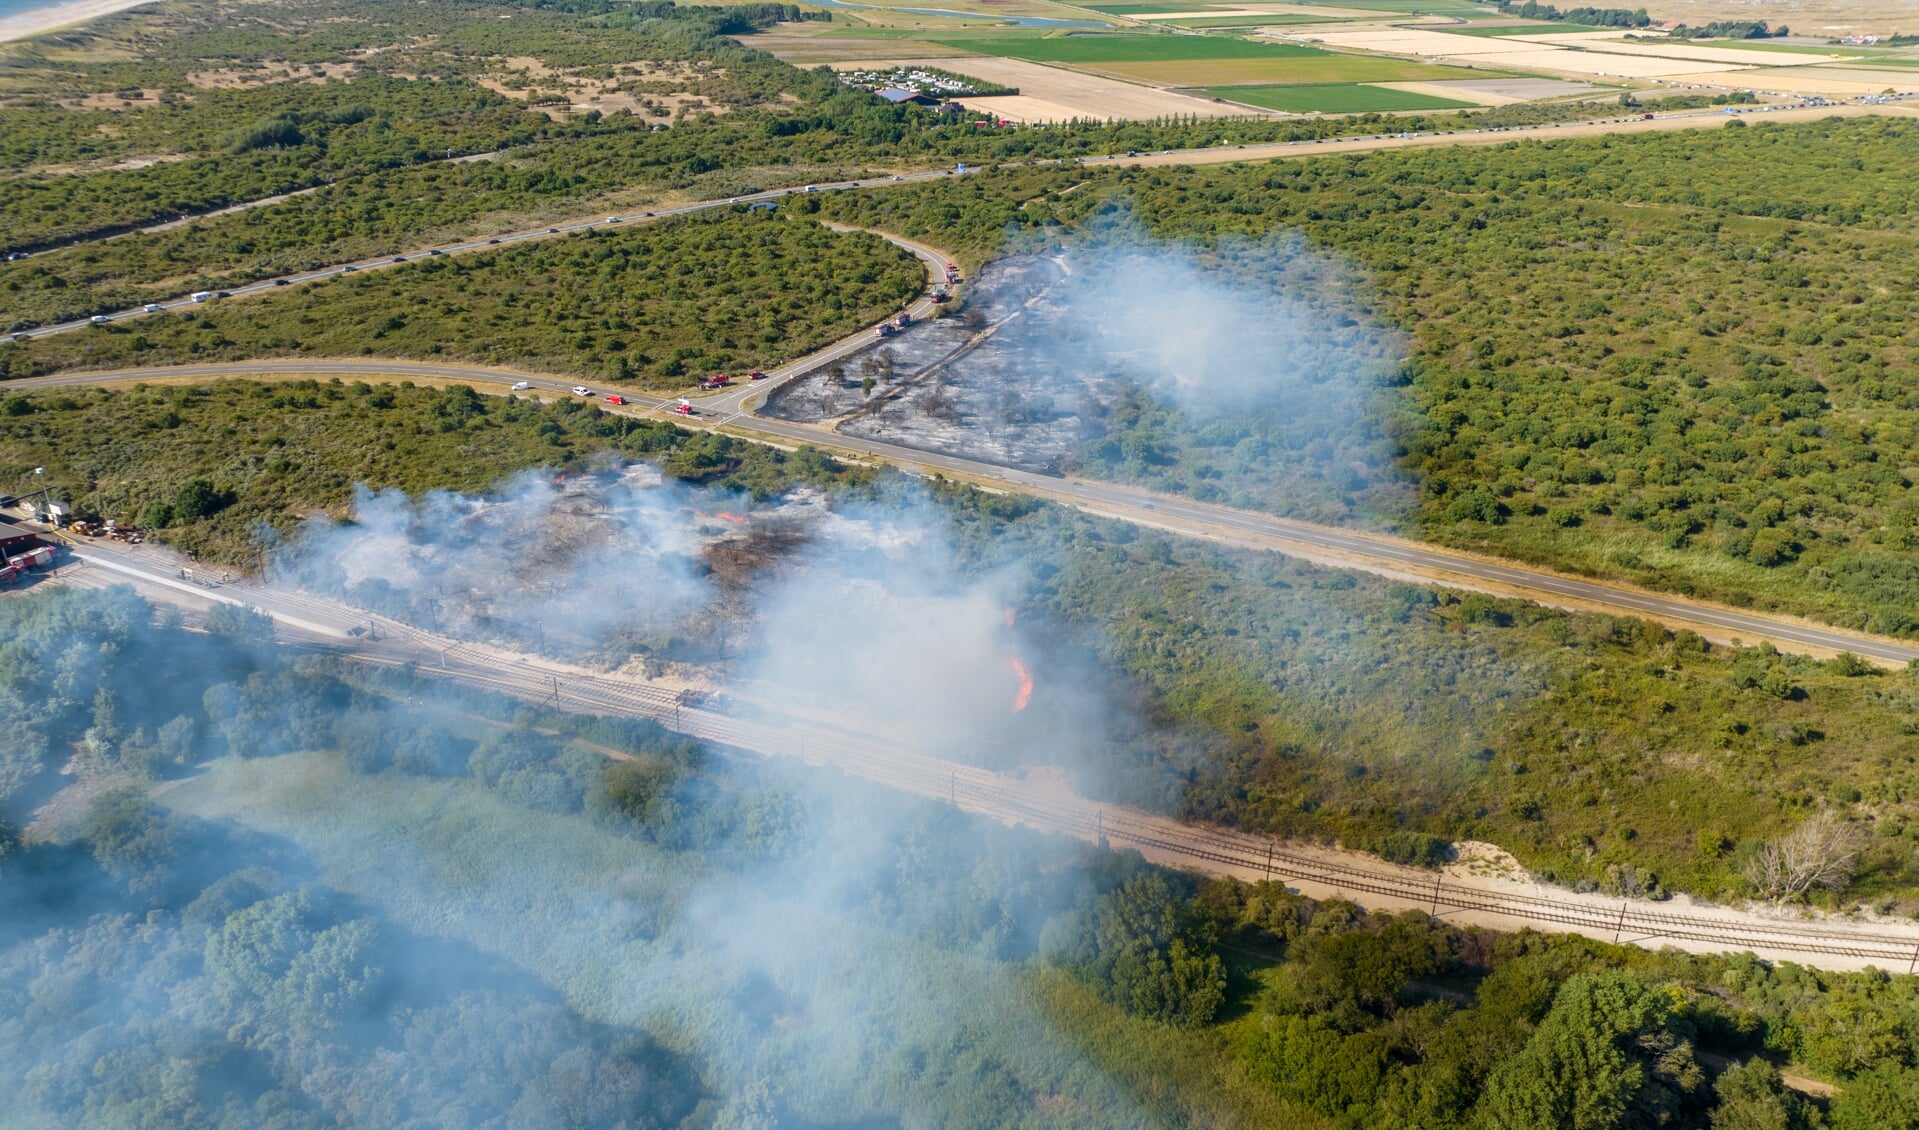 De brand, gezien vanuit de lucht (Foto: bjornmierop.nl).